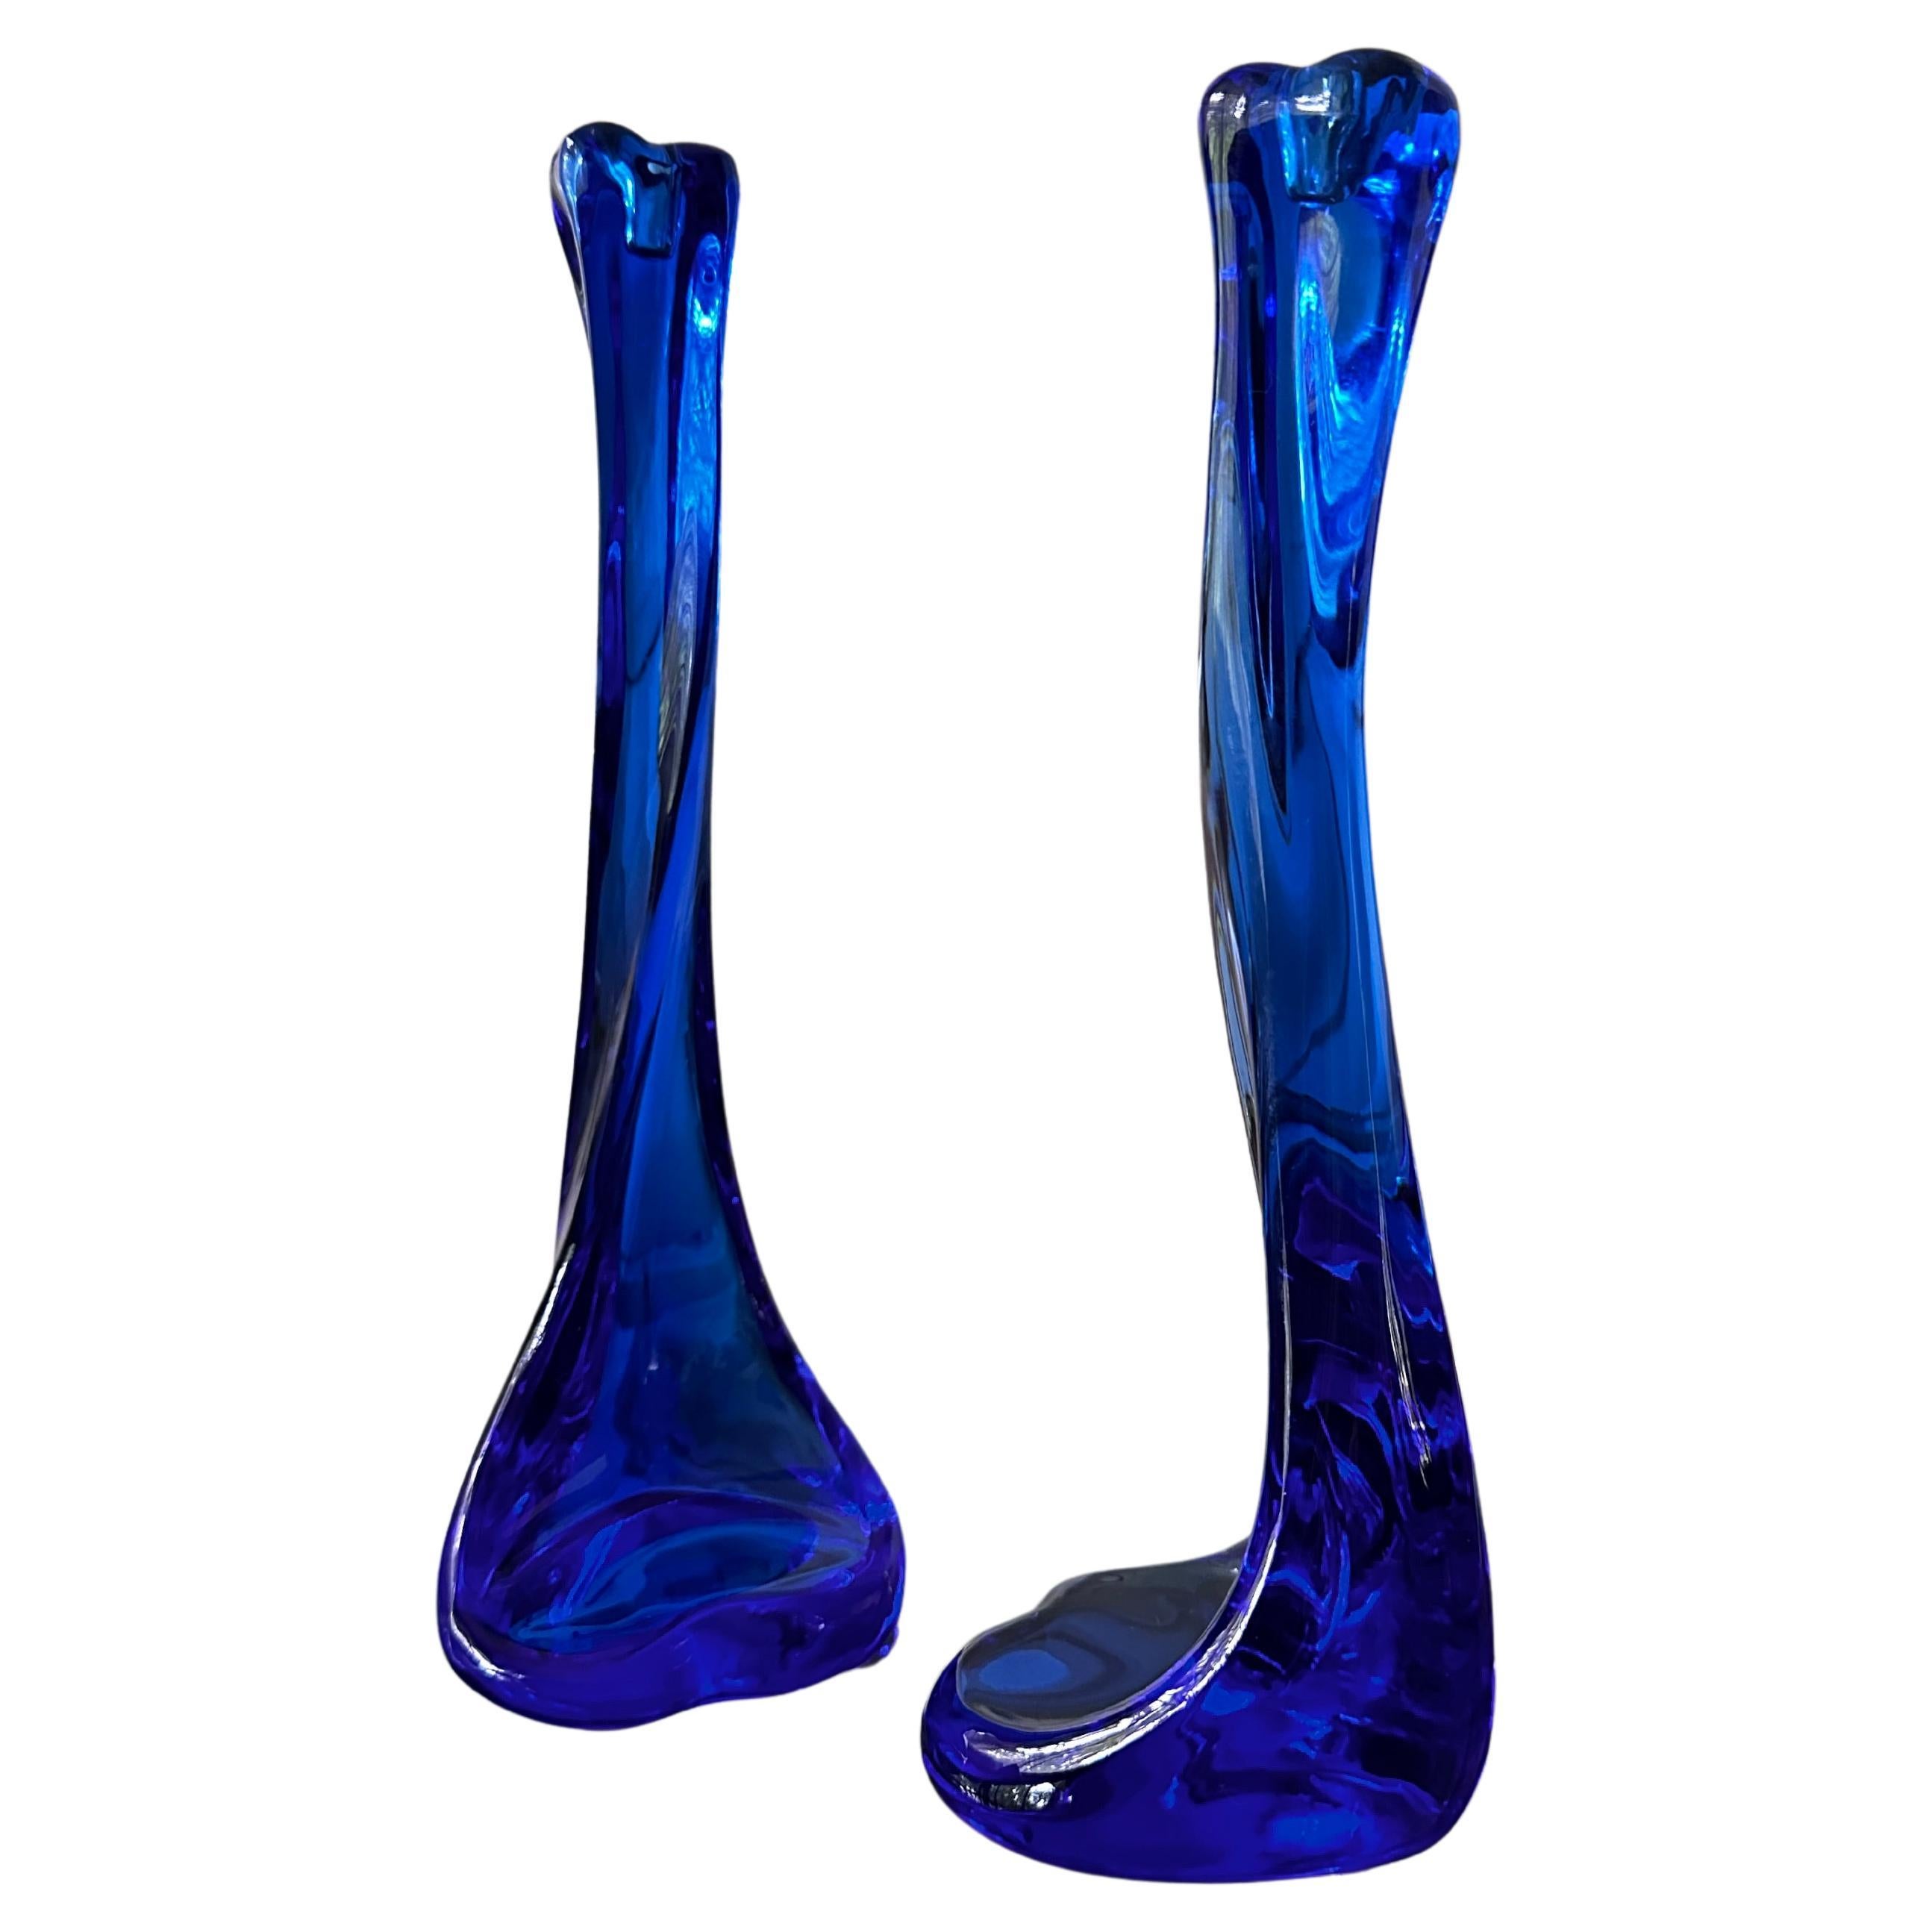 Blue Crystel "Bone" Series Candlesticks Designed by Elsa Peretti for Tiffany For Sale